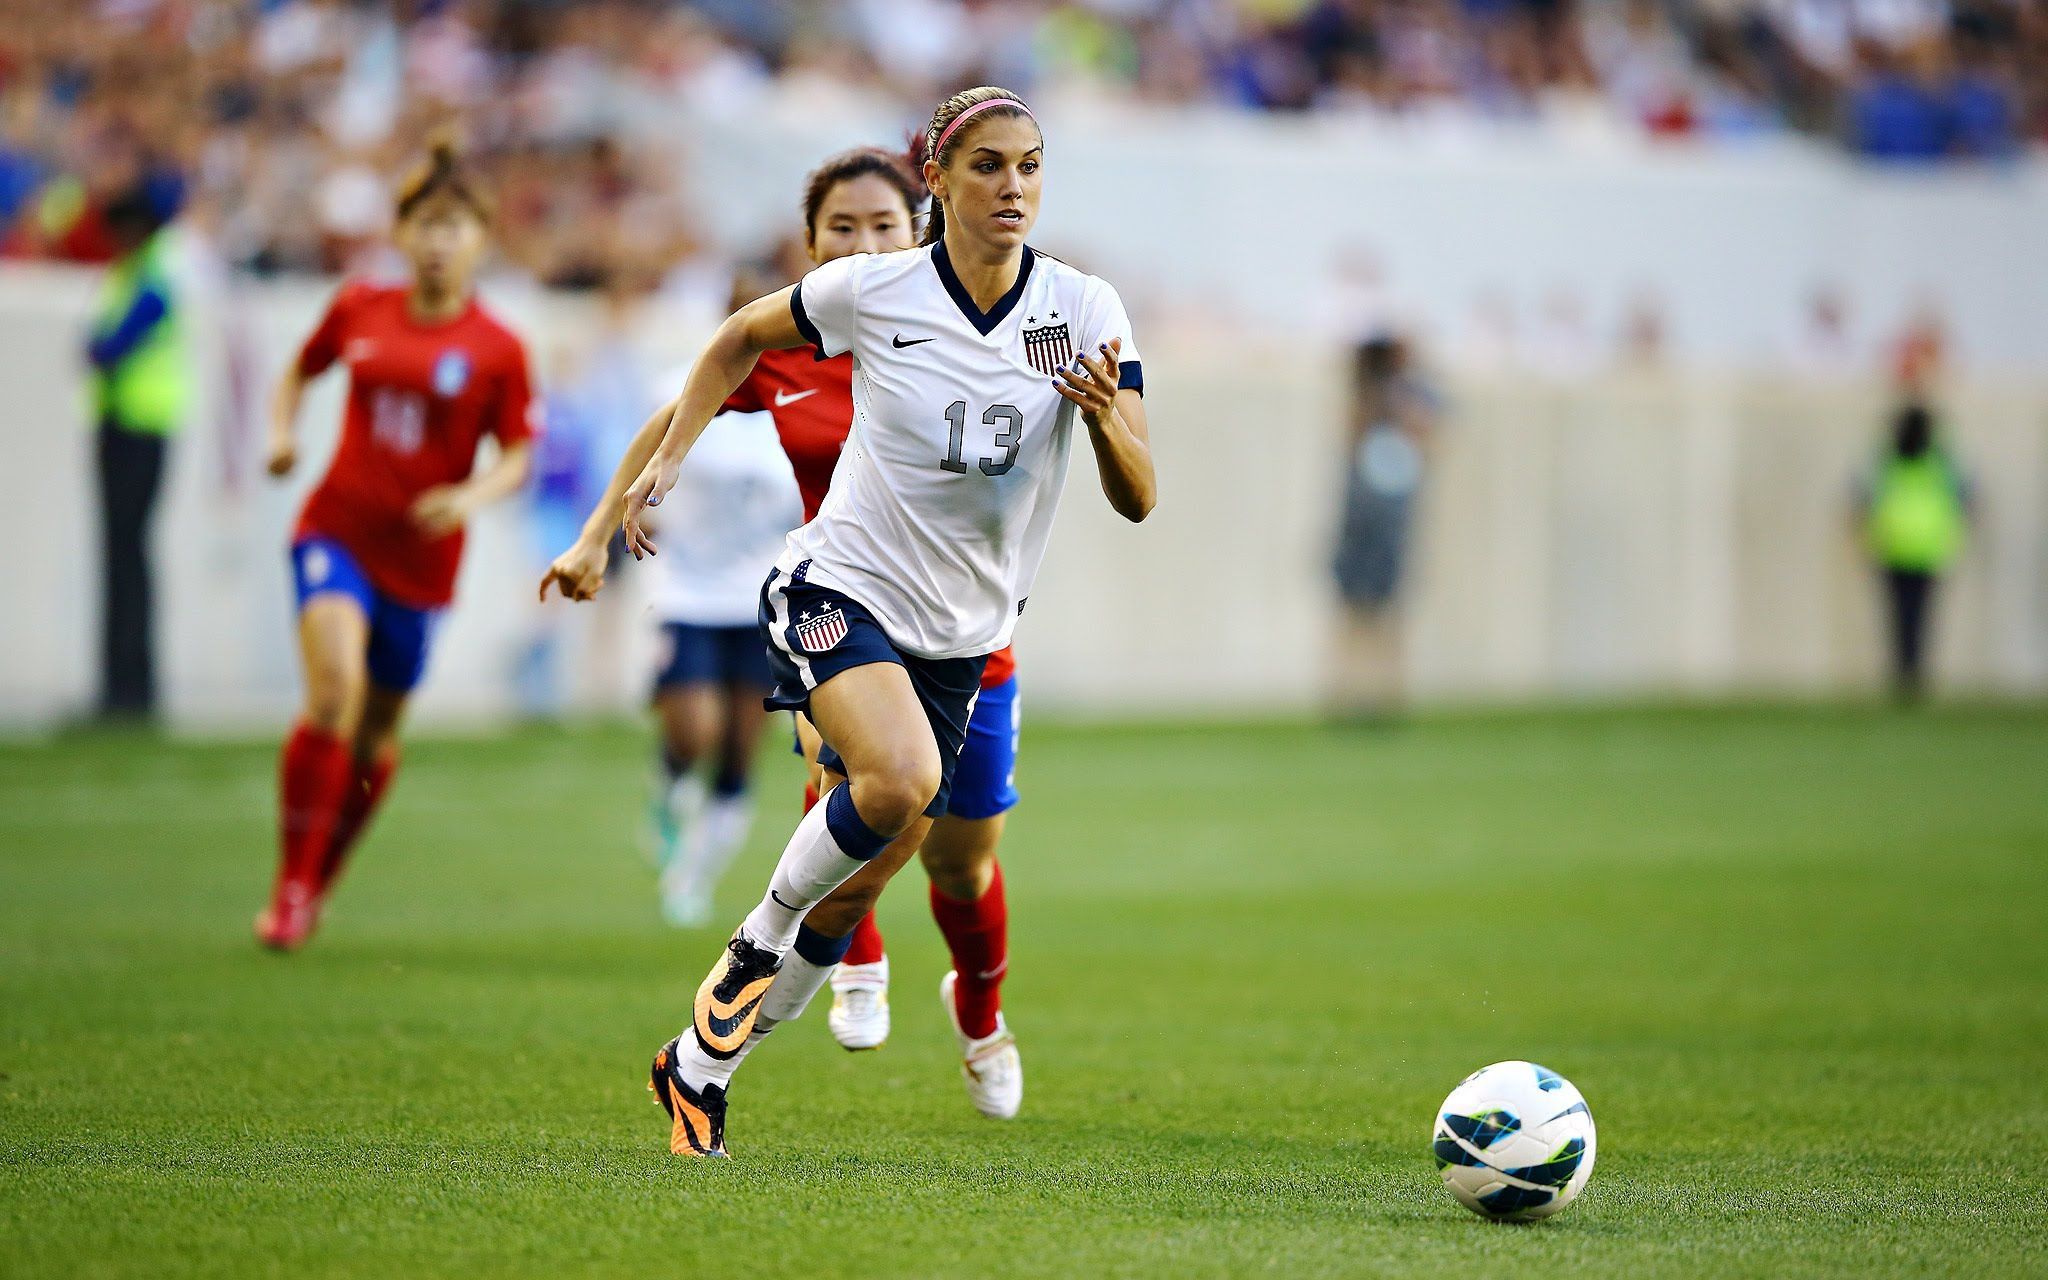 Alex-Morgan-U.S-Women-Soccer-Player-National-Team-Girl-Alex-Morgan-Wallpaper-and-Image.jpg